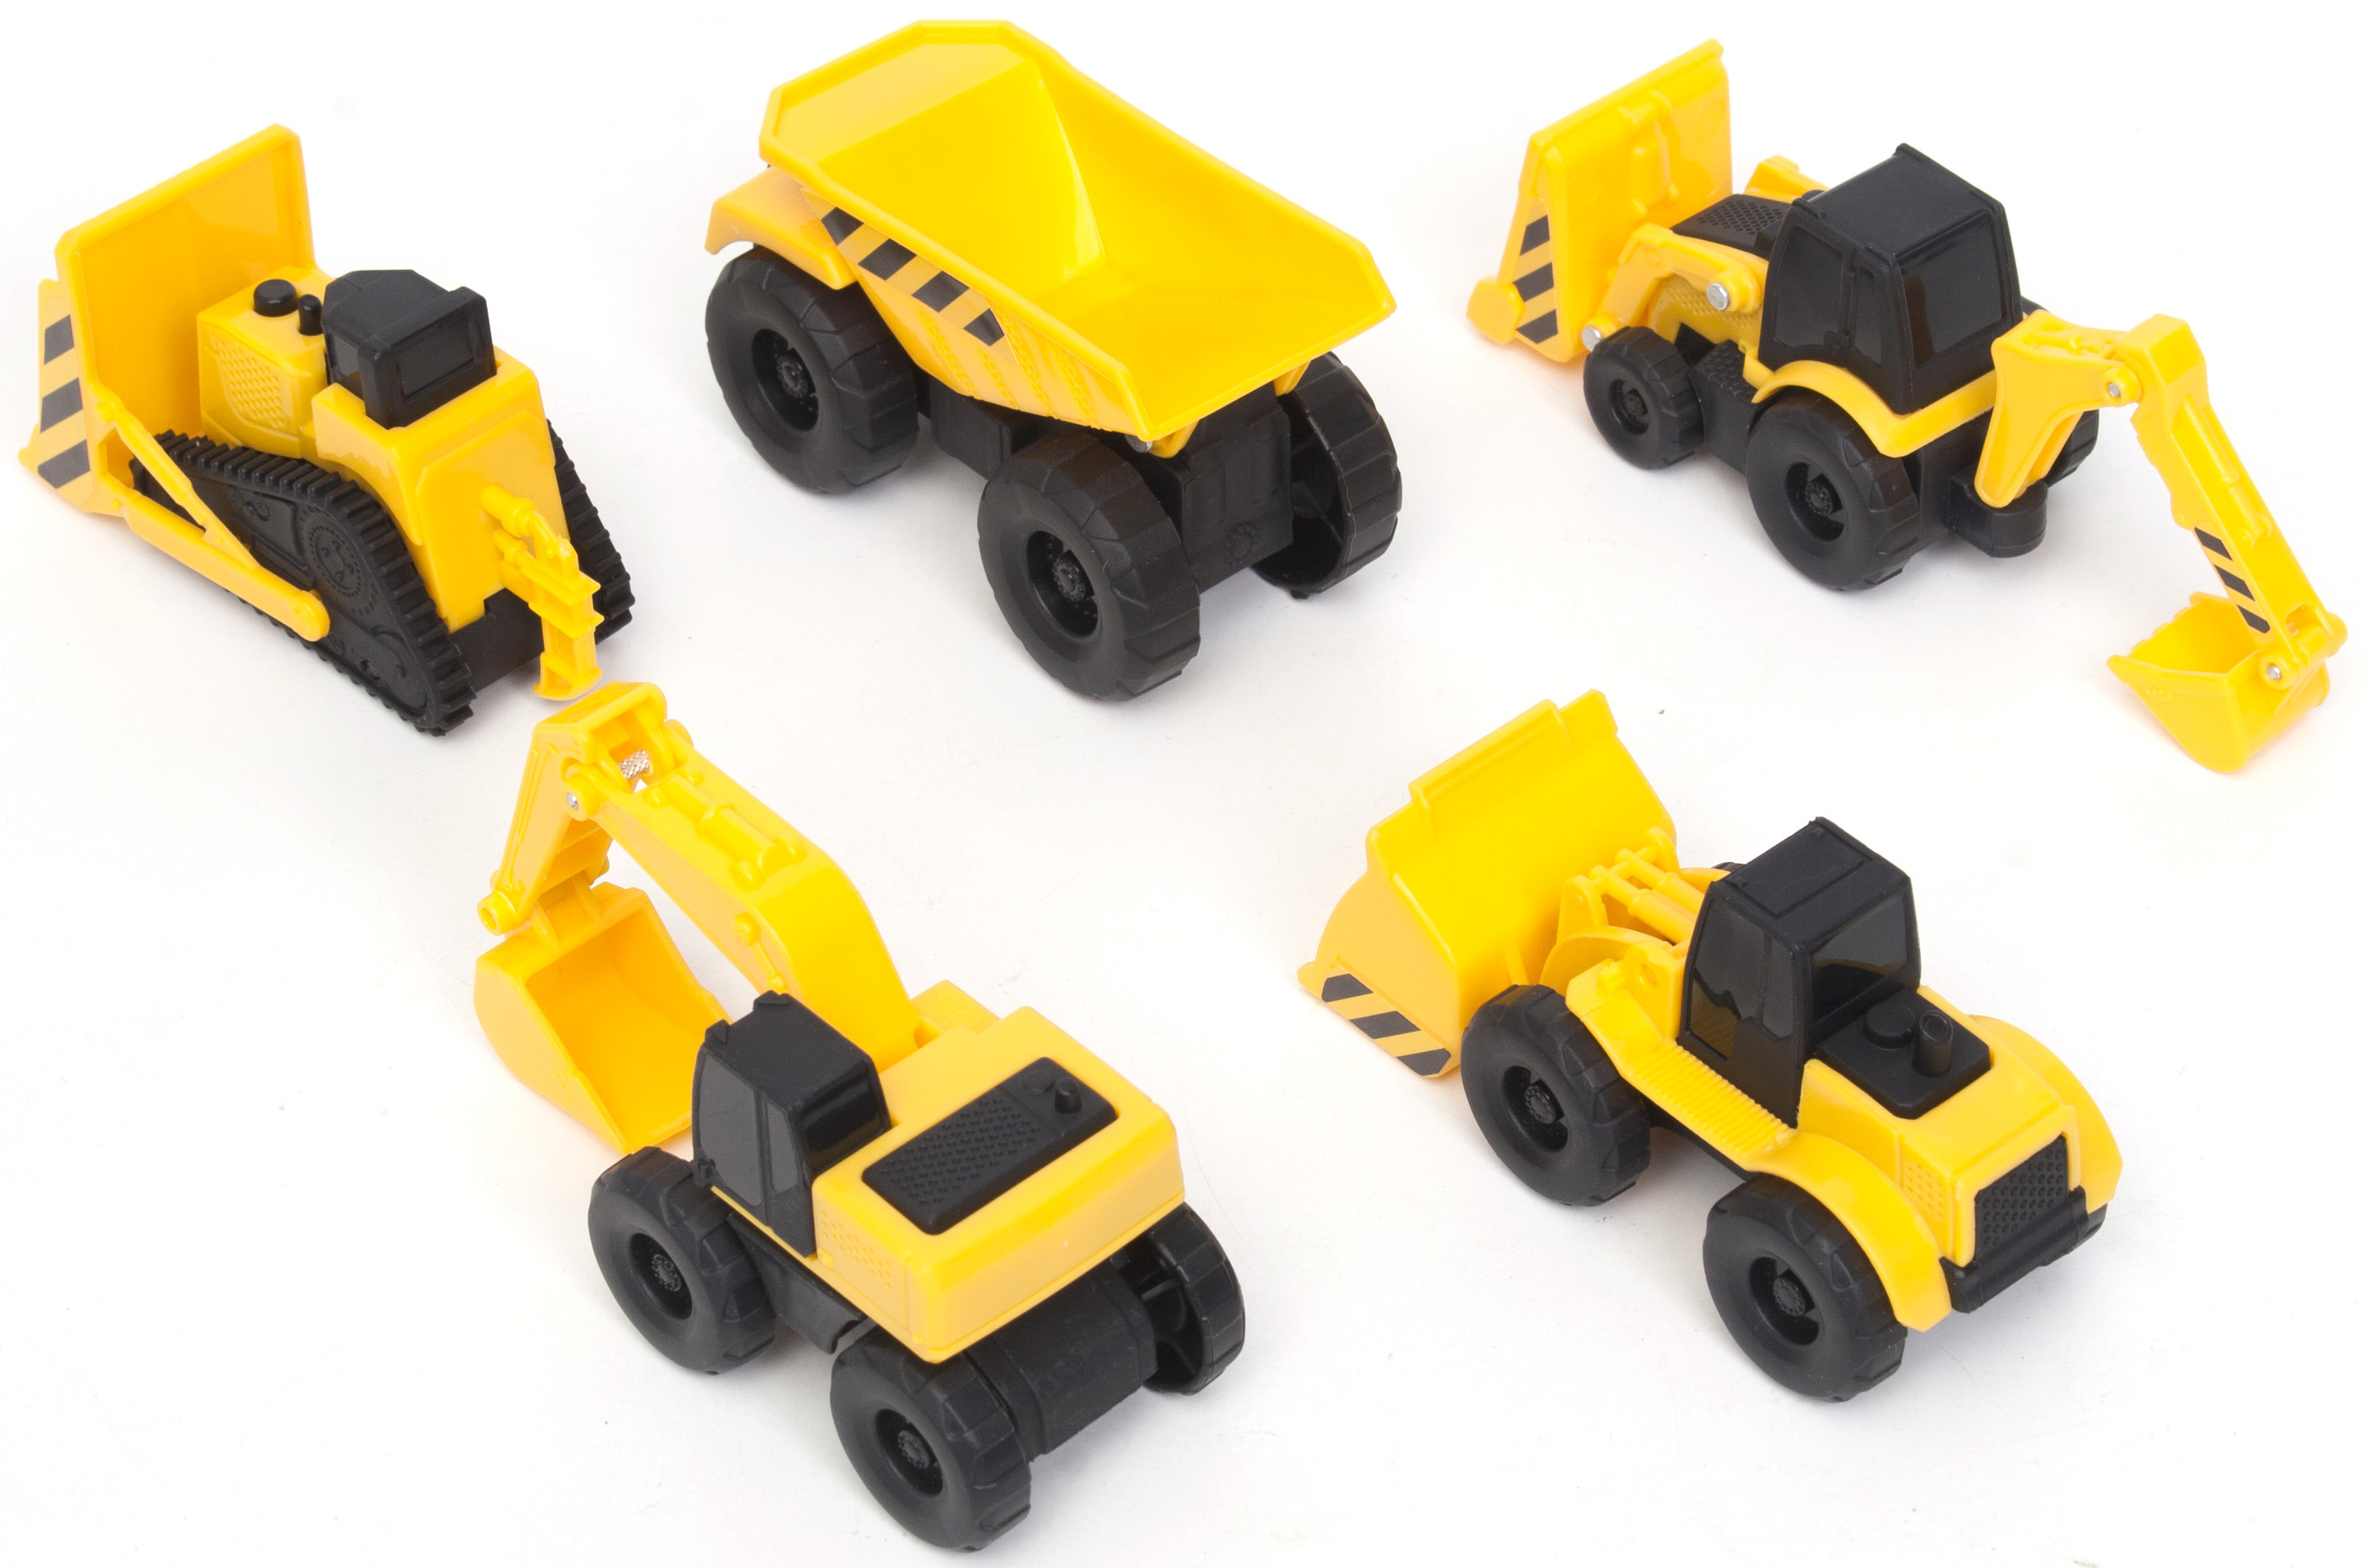 Adventure Force Mini Construction Service Vehicles, 5 Pieces - image 6 of 7